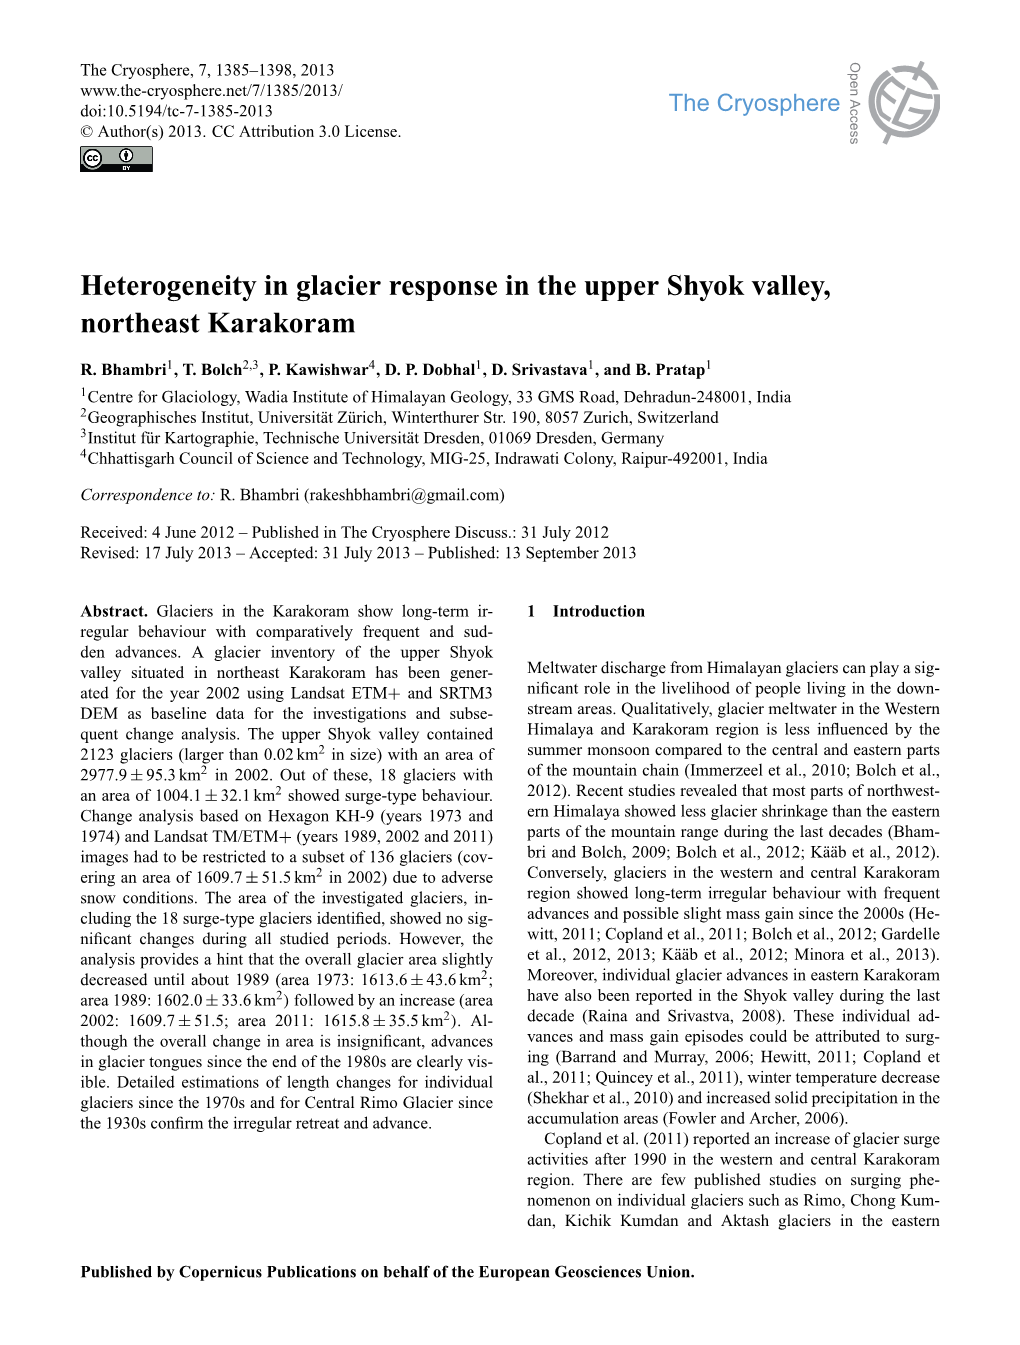 Heterogeneity in Glacier Response in the Upper Shyok Valley, Northeast Karakoram